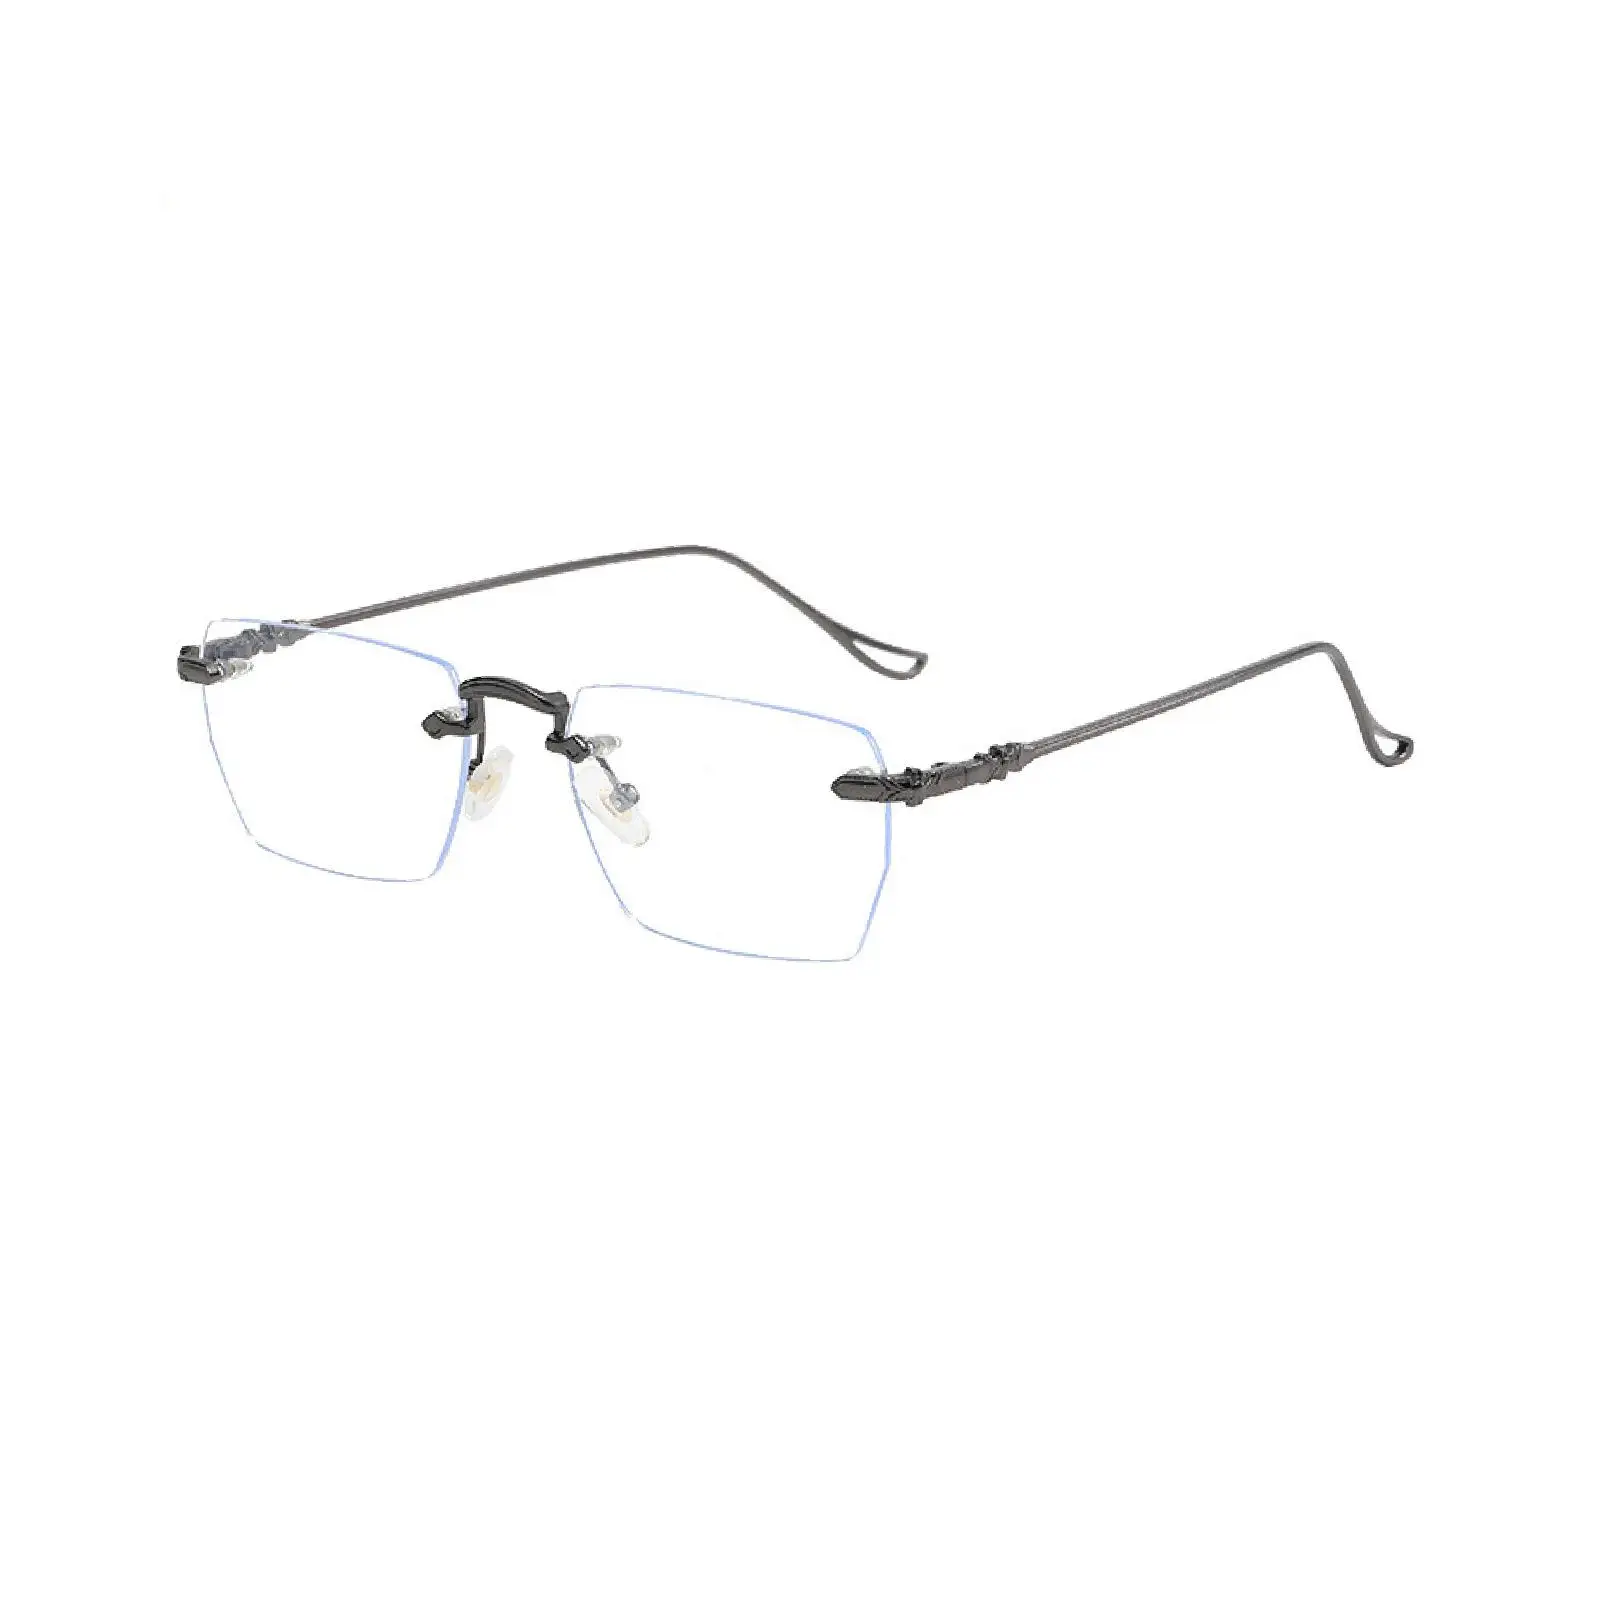 Anti Blue Light Glasses for Adult Comfortable Rimless Clear Lens Eyeglasses Fashion Rectangle Glasses Gaming Eyeglasses Eyewear